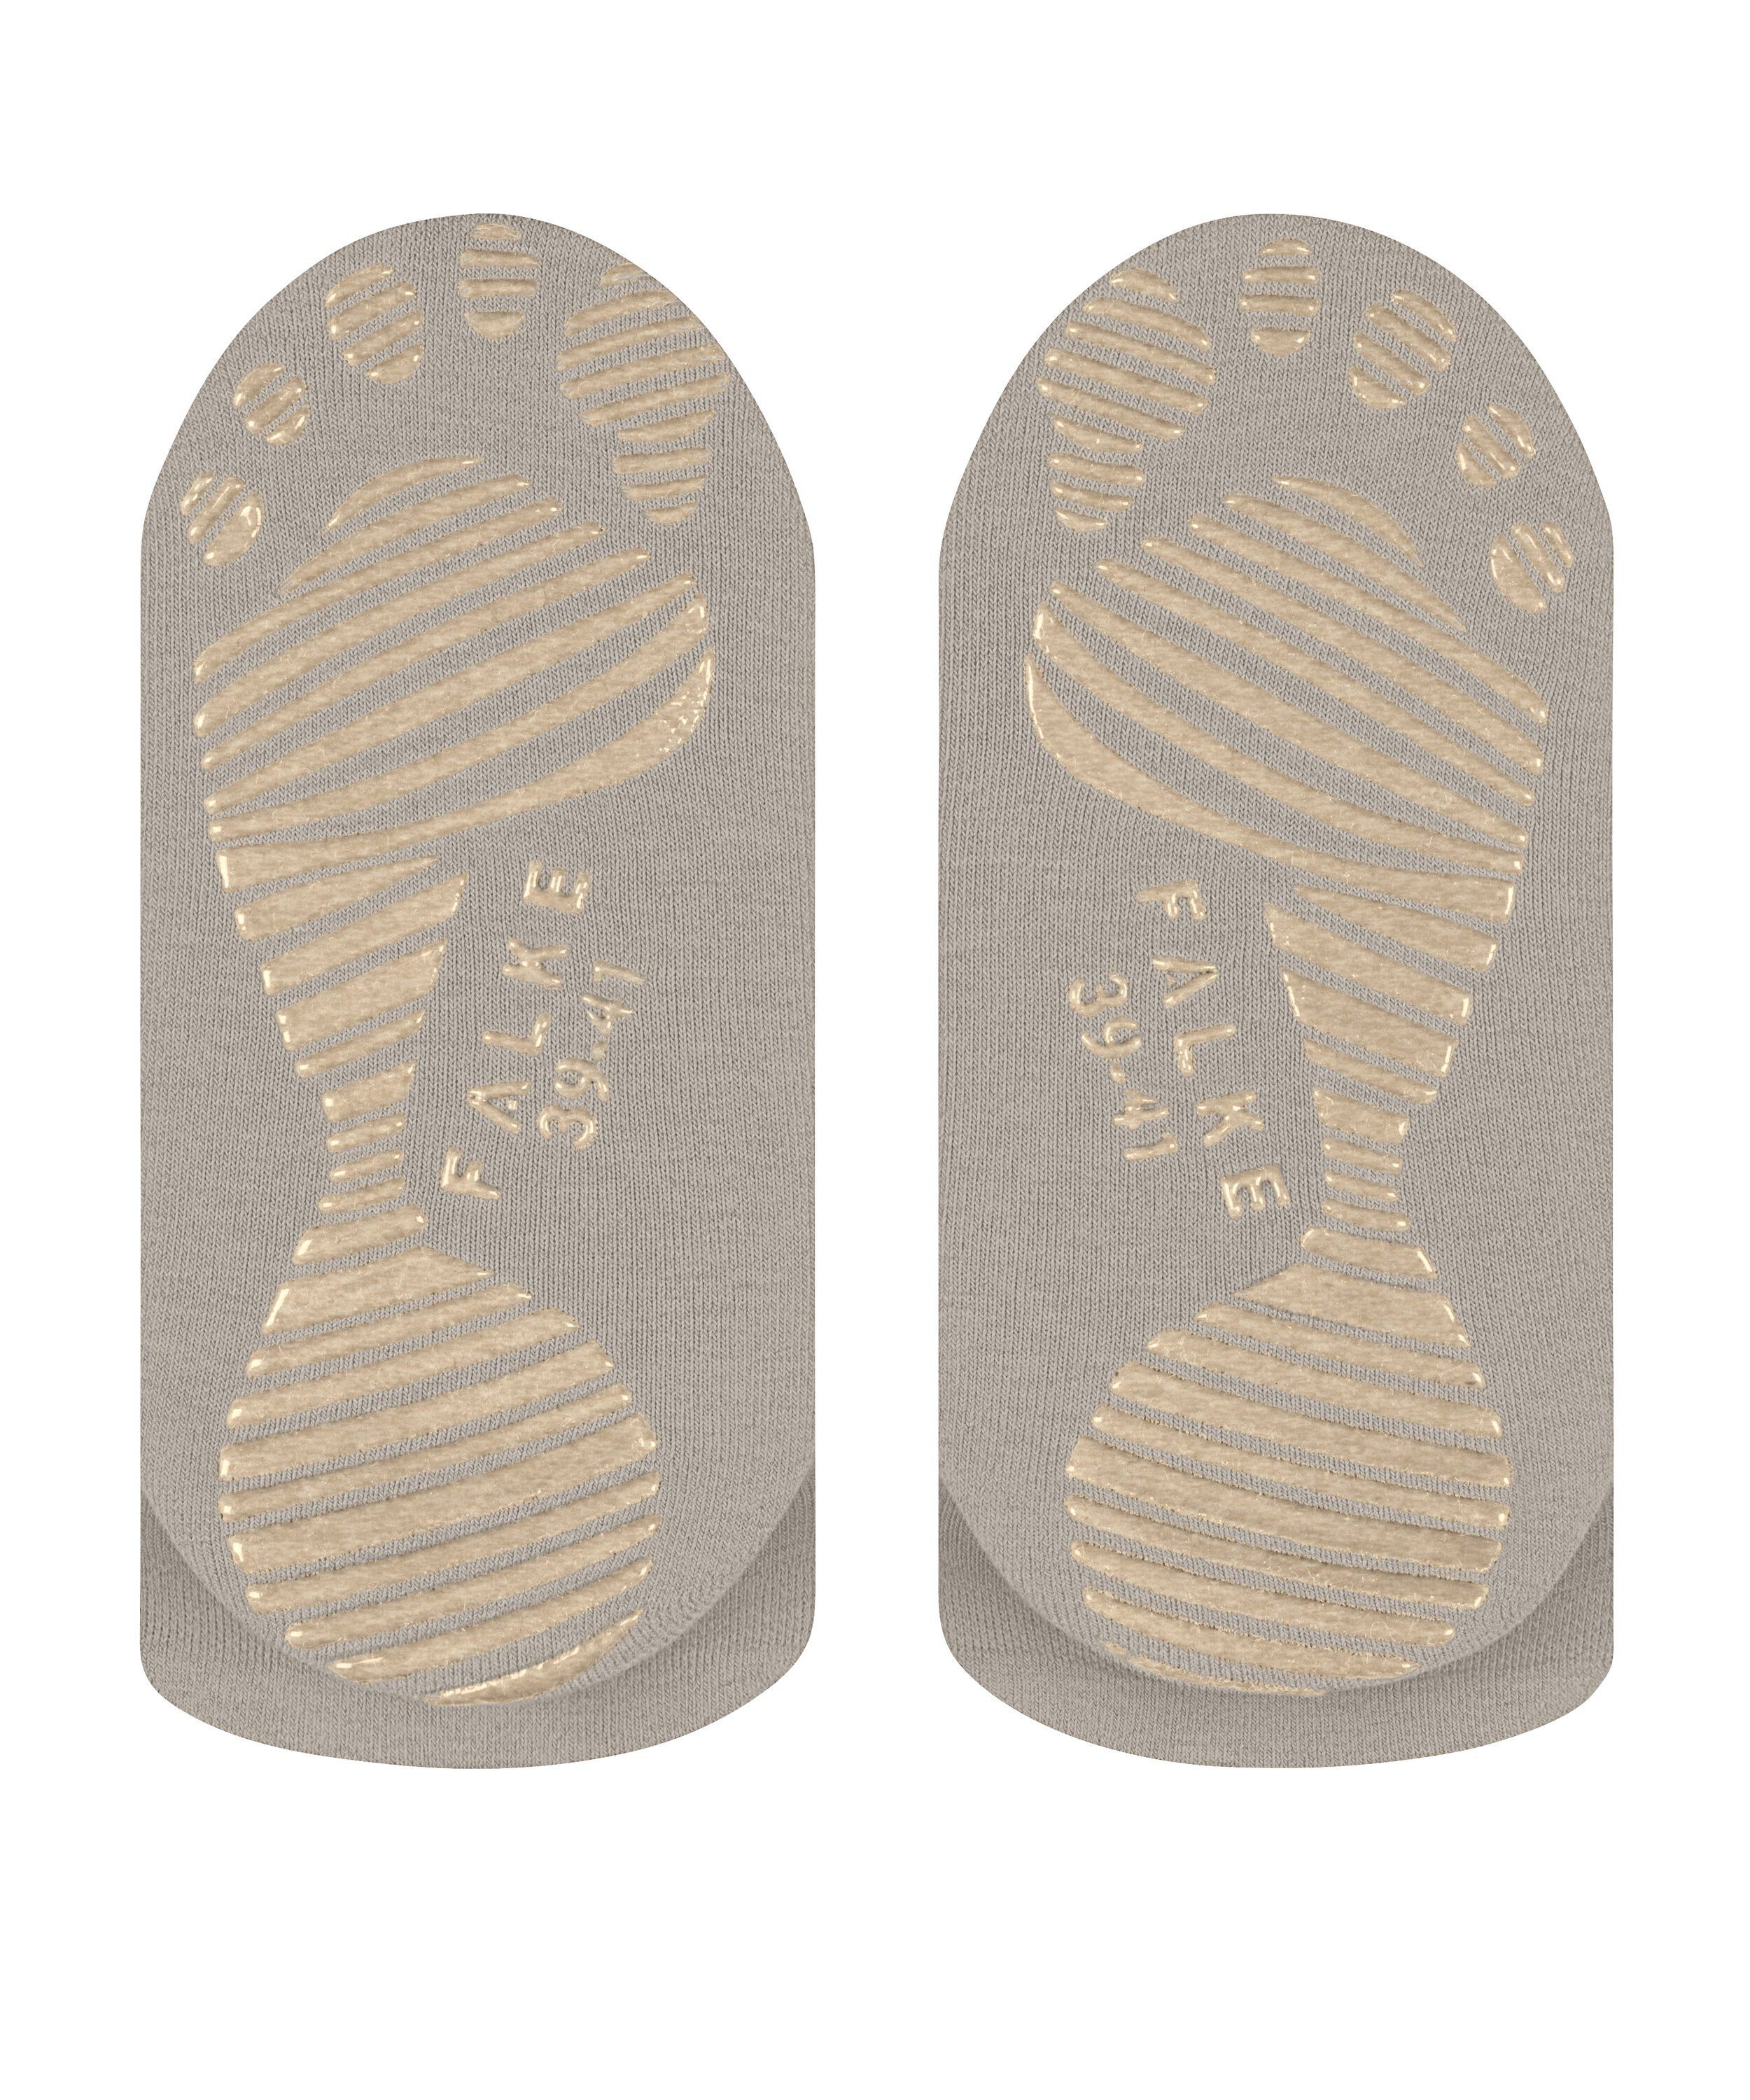 FALKE Sneakersocken Cool Kick rutschhemmendem (4775) towel (1-Paar) auf Noppendruck Sohle mit der